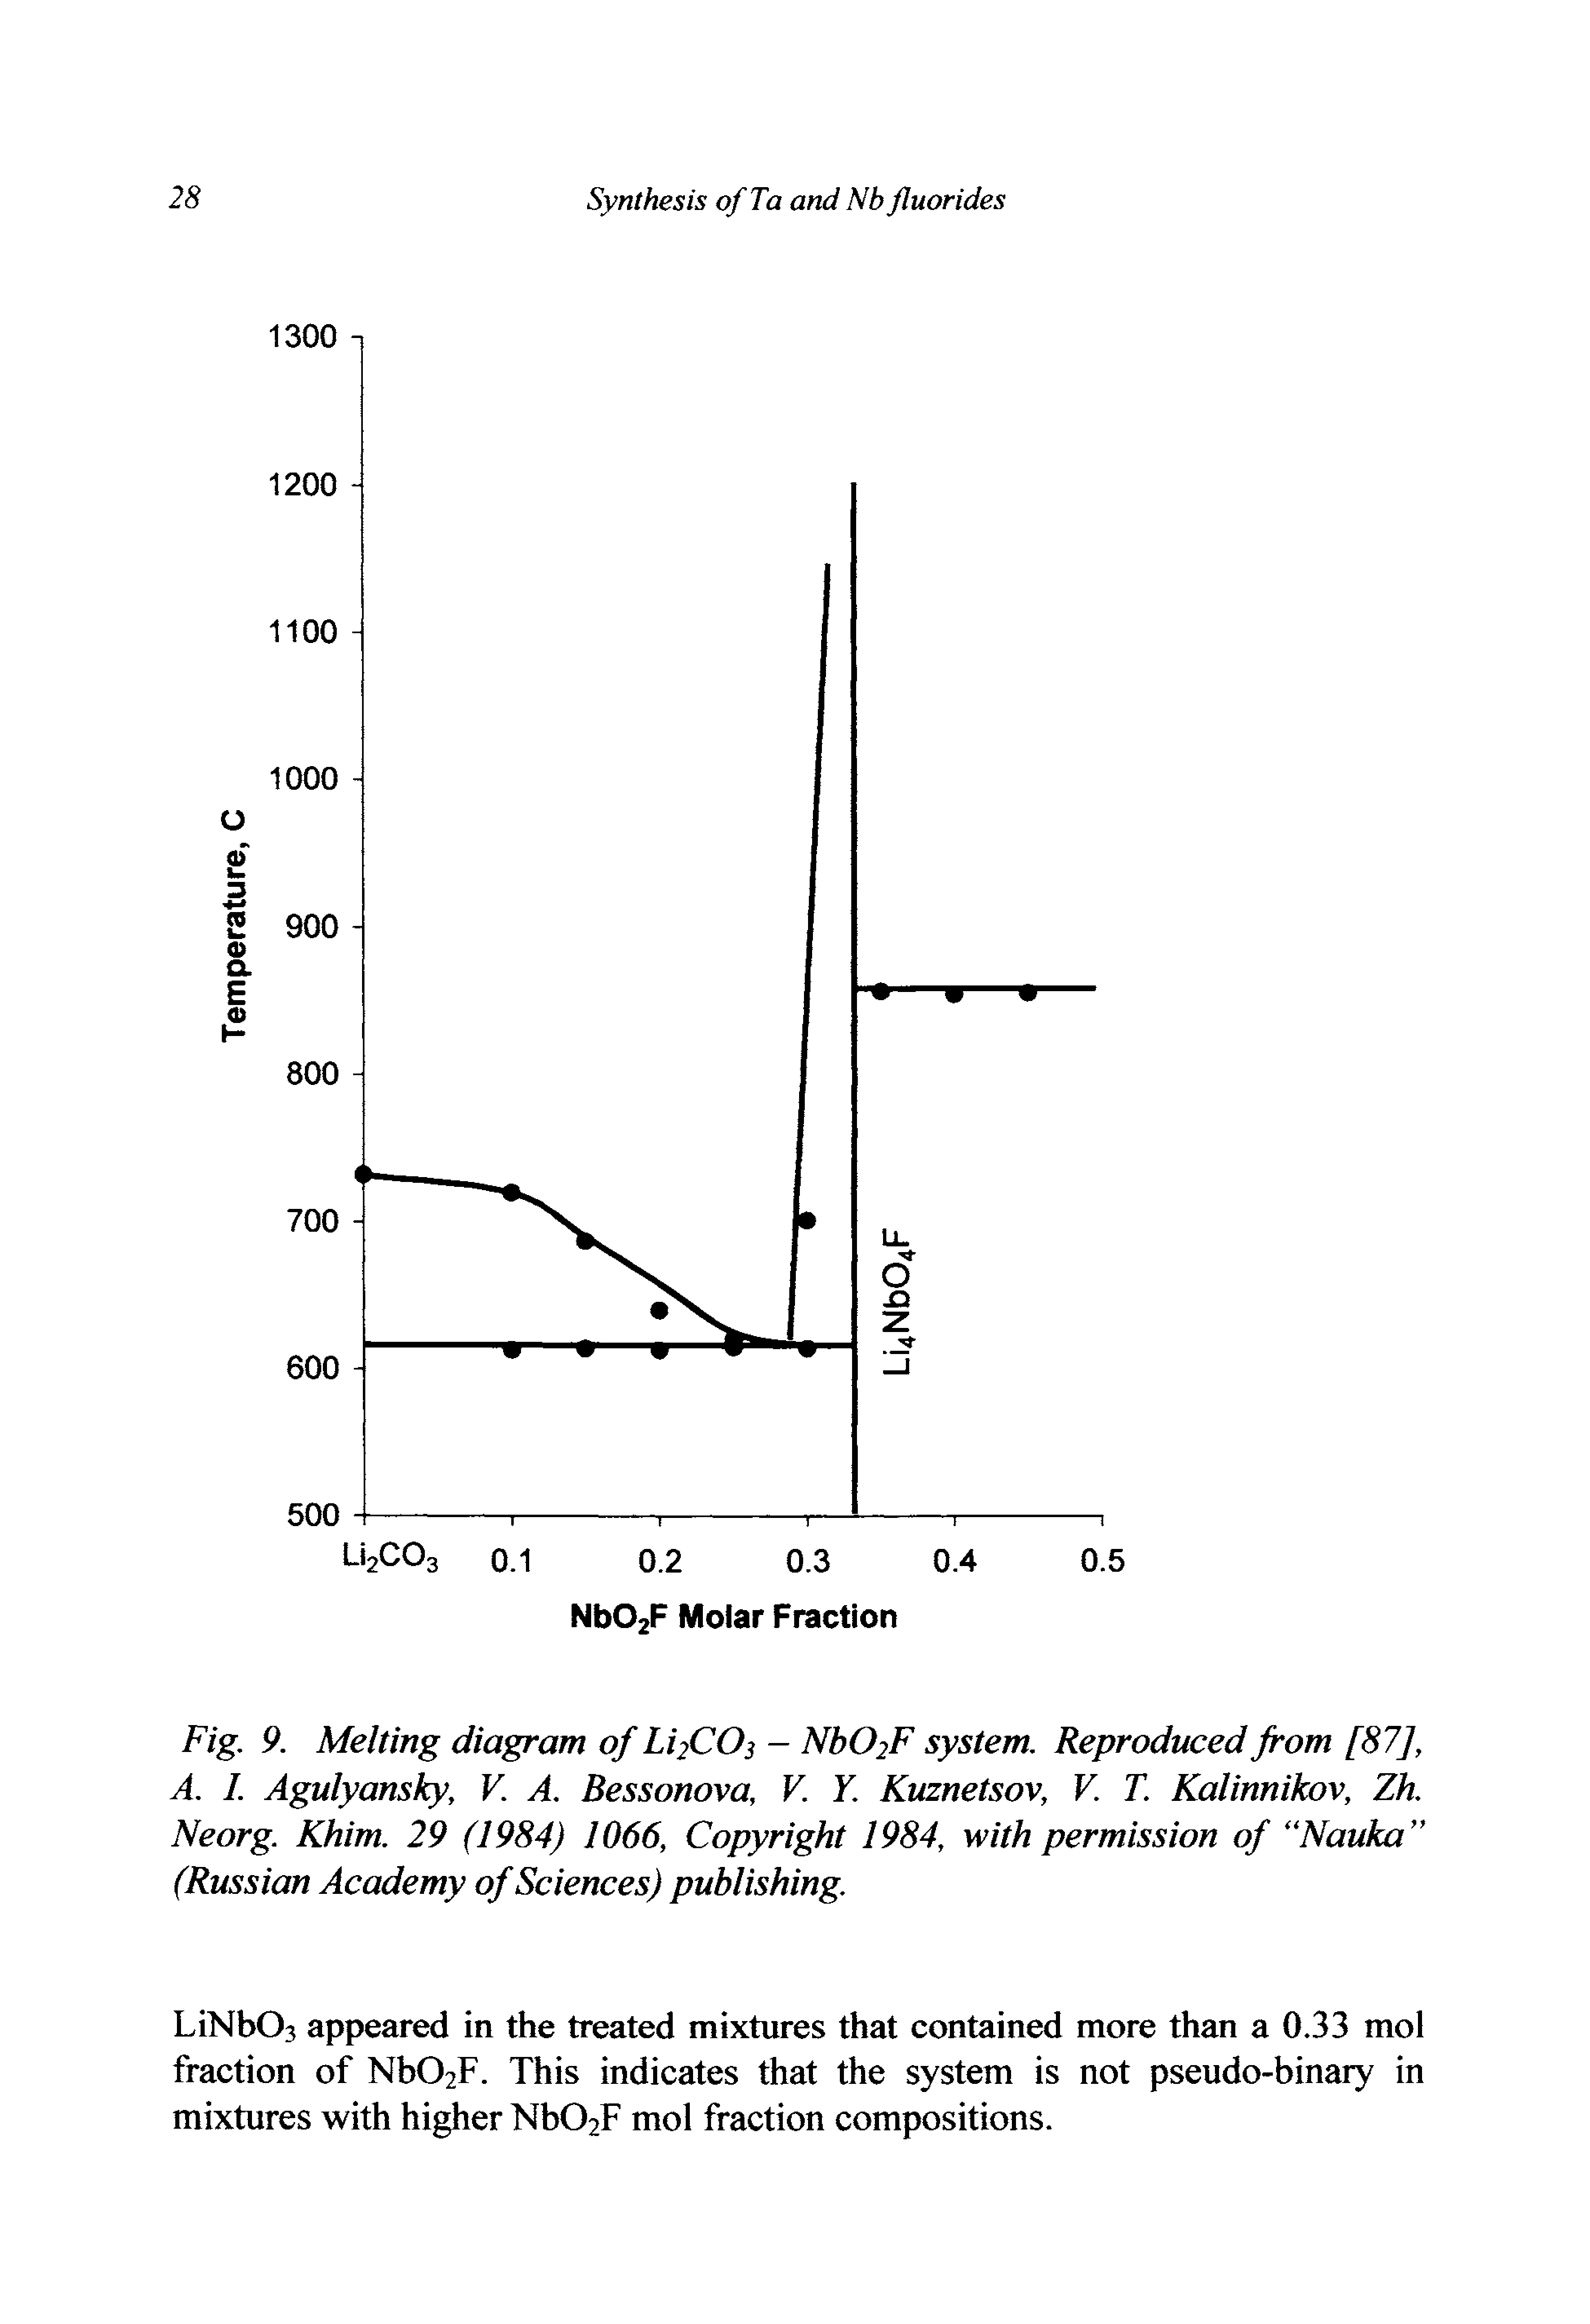 Fig. 9. Melting diagram of LifCOi - NbC>2F system. Reproduced from [87], A. I. Agulyansky, V. A. Bessonova, V. Y. Kuznetsov, V. T. Kalinnikov, Zh. Neorg. Khim. 29 (1984) 1066, Copyright 1984, with permission of Nauka (Russian Academy of Sciences) publishing.